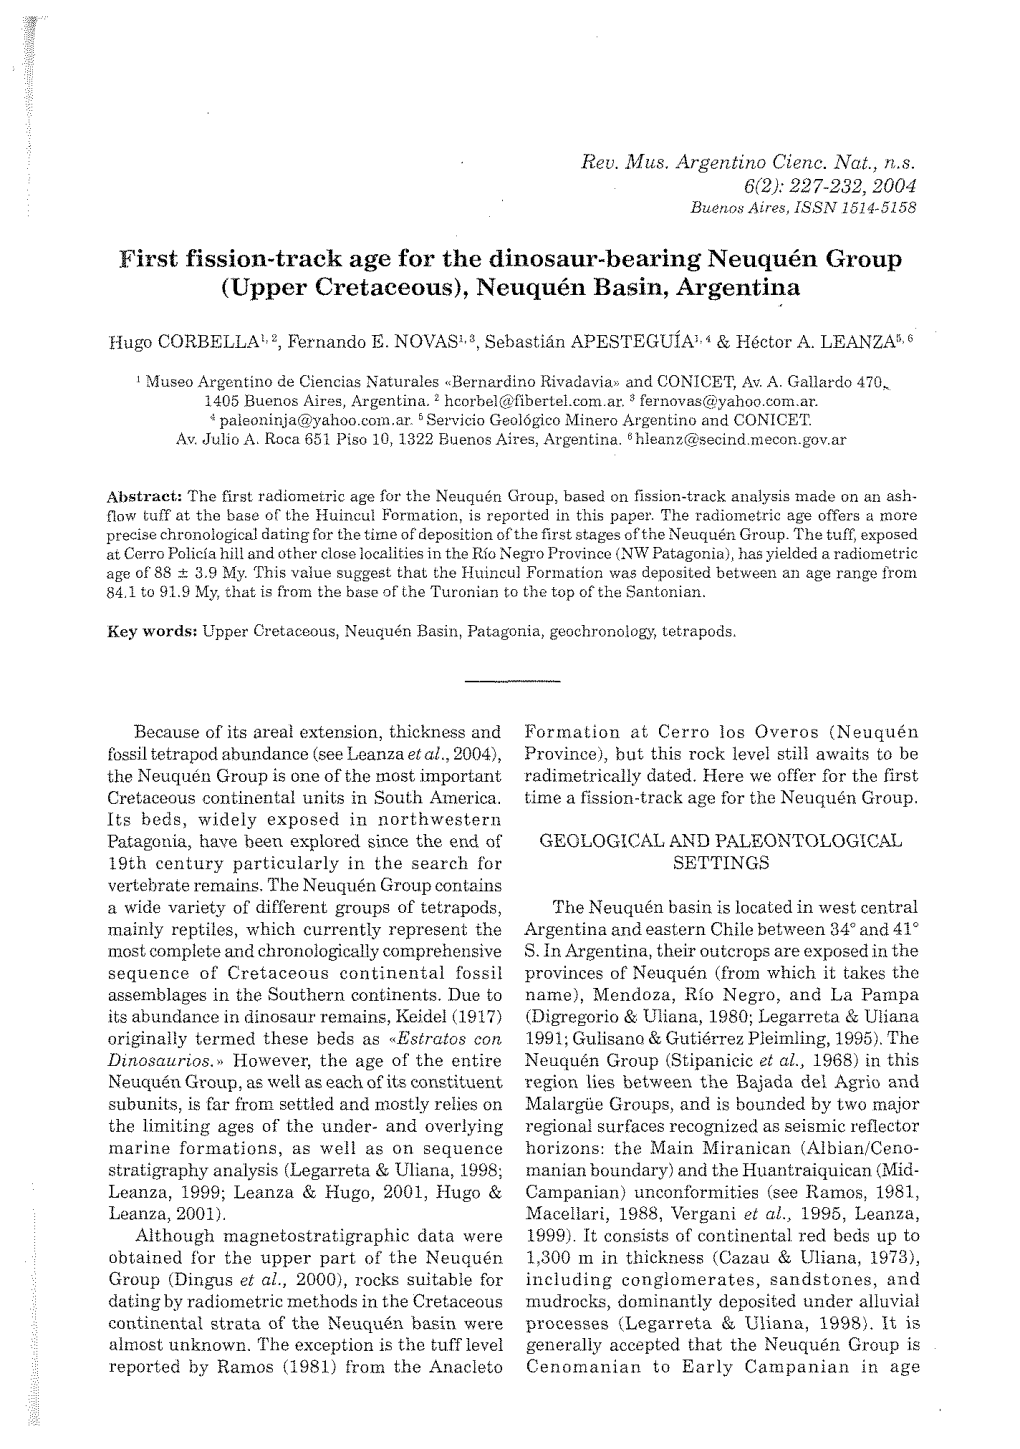 First Fission-Track Age for the Dinosaur-Bearing Neuqukn Group (Upper Cretaceous),Neuqukn Basin, Argentina Ffugo CC)RBEI,L.A!', E'erriando E